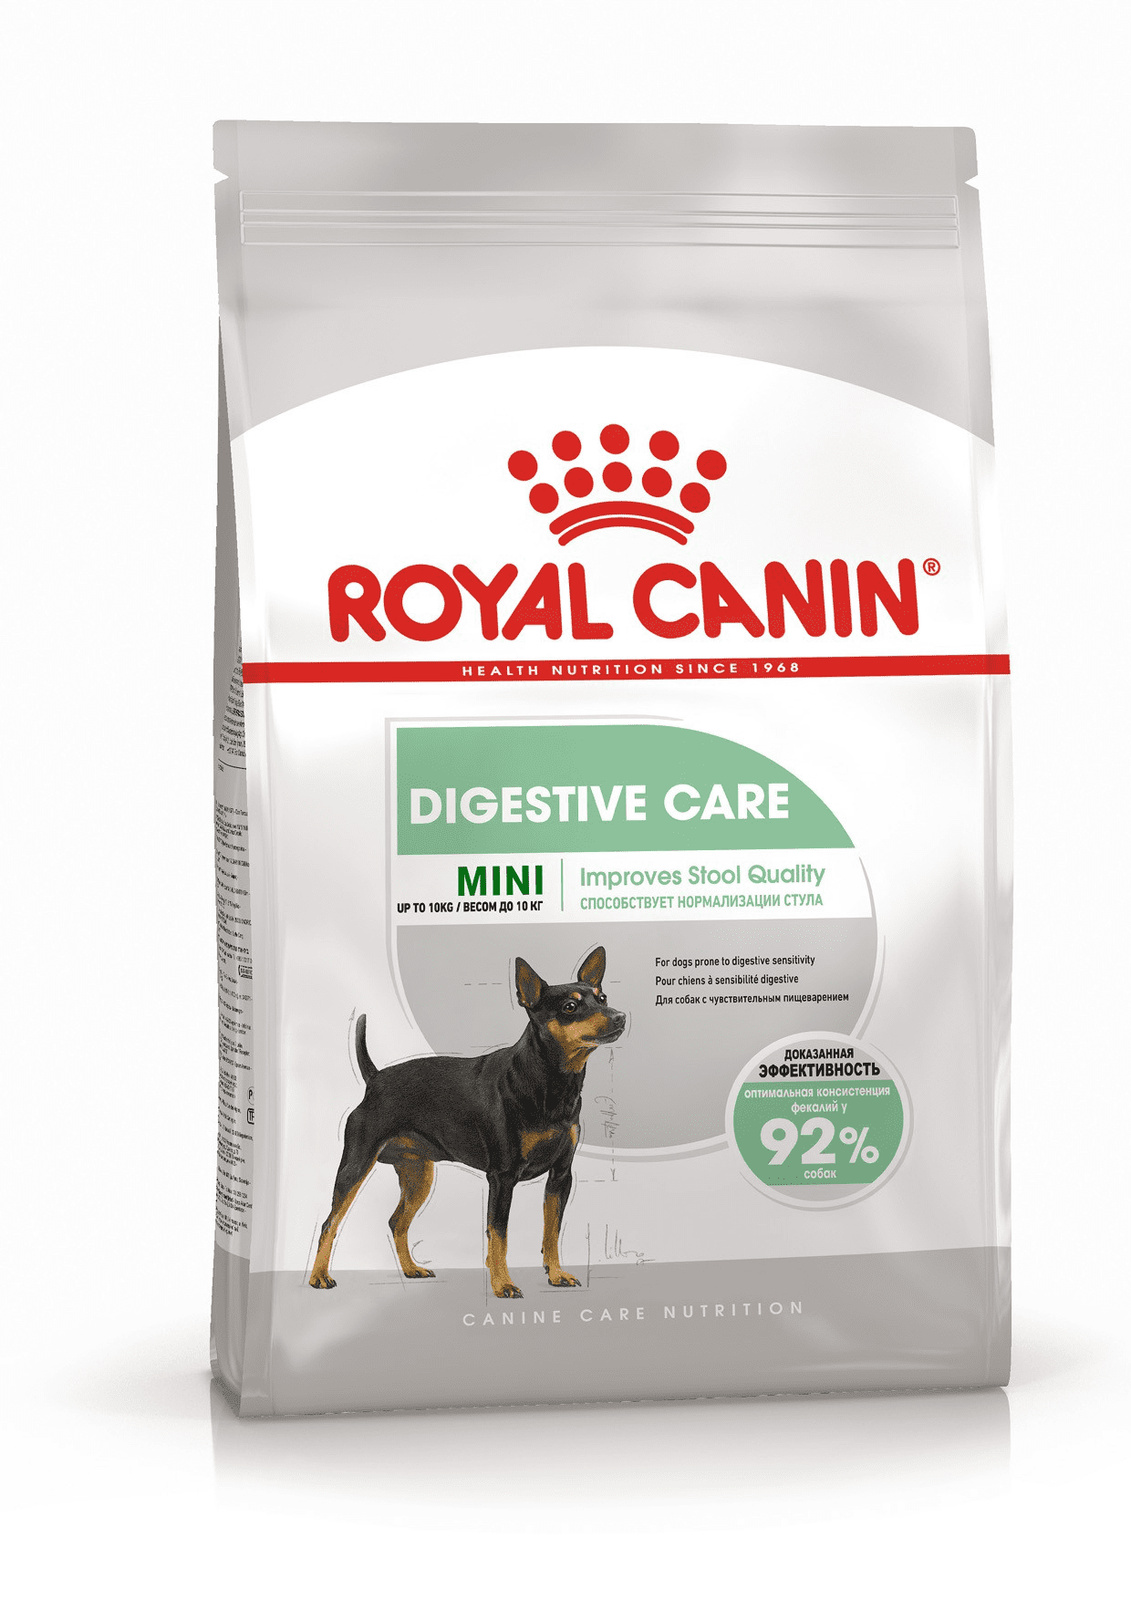 Royal Canin Корм Royal Canin для собак малых пород - забота о пищеварении (1 кг) royal canin корм royal canin для собак малых пород забота о пищеварении 1 кг